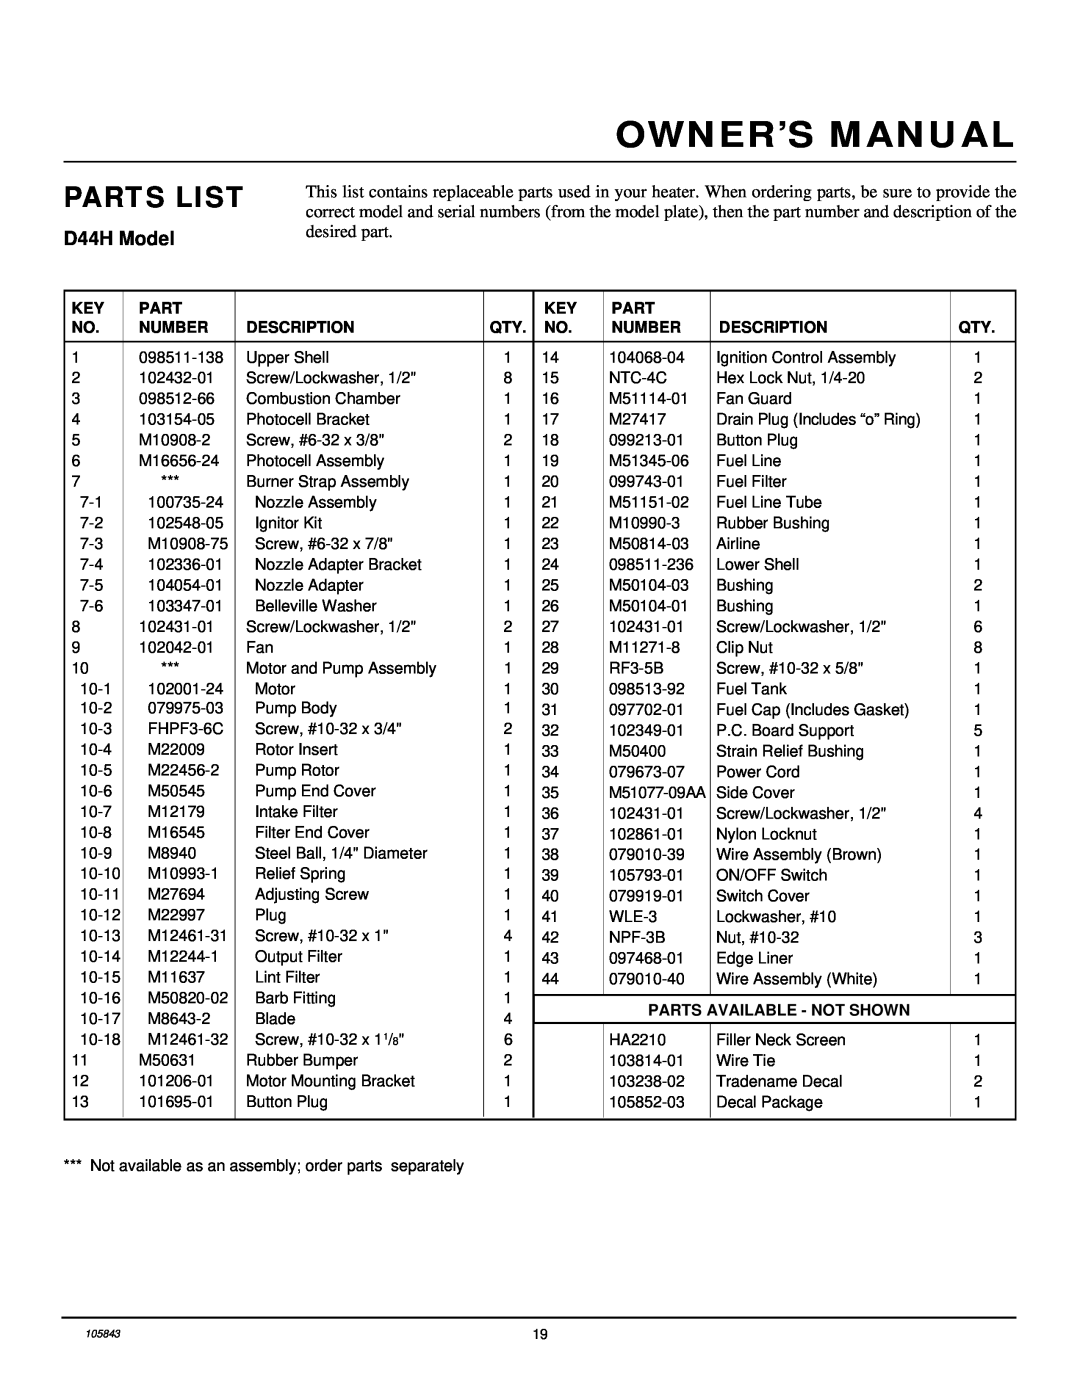 Desa D30H, D20H owner manual Parts List, D44H Model 